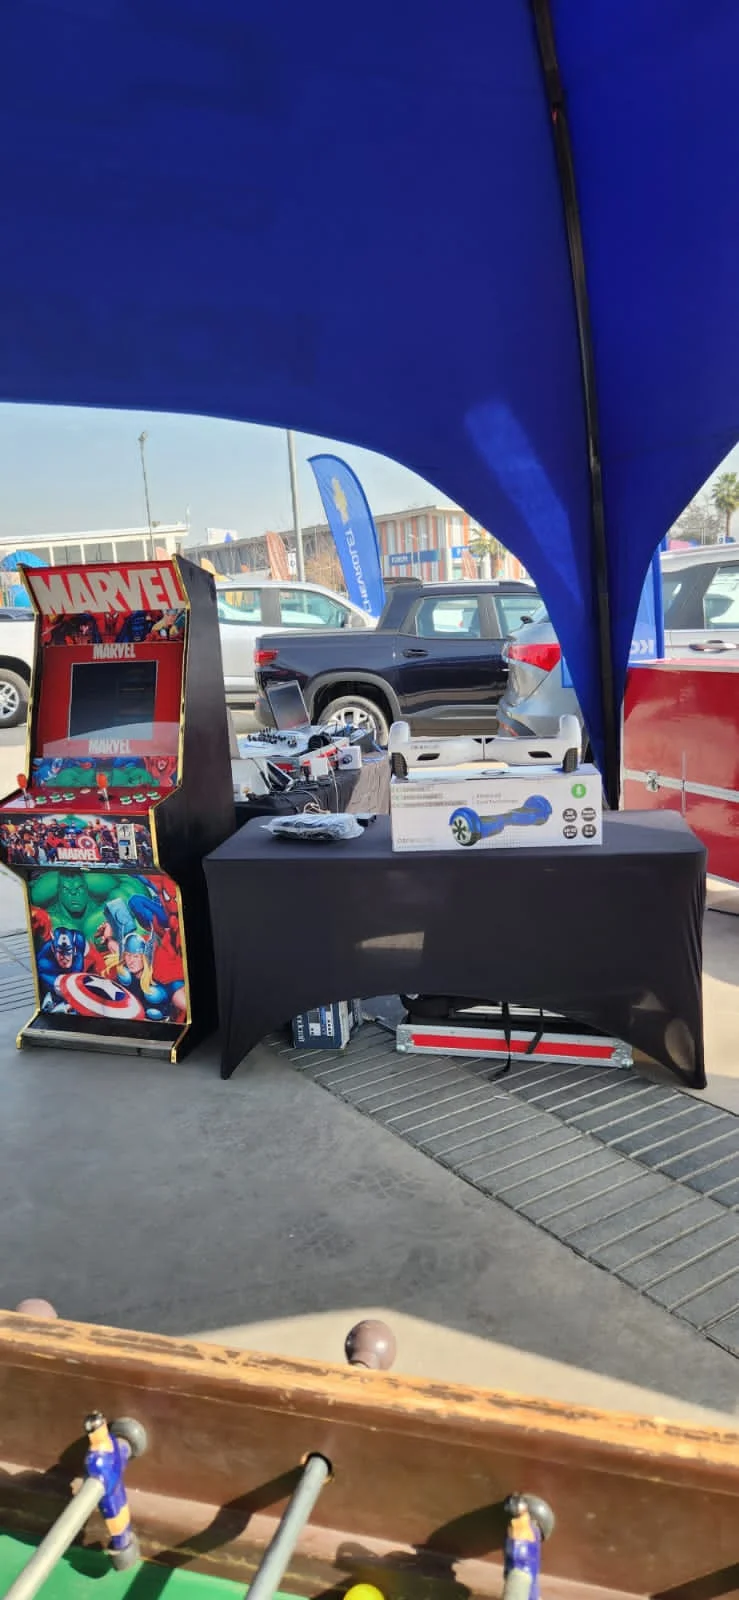 Máquina Arcade Marvel – Santiago Inflable